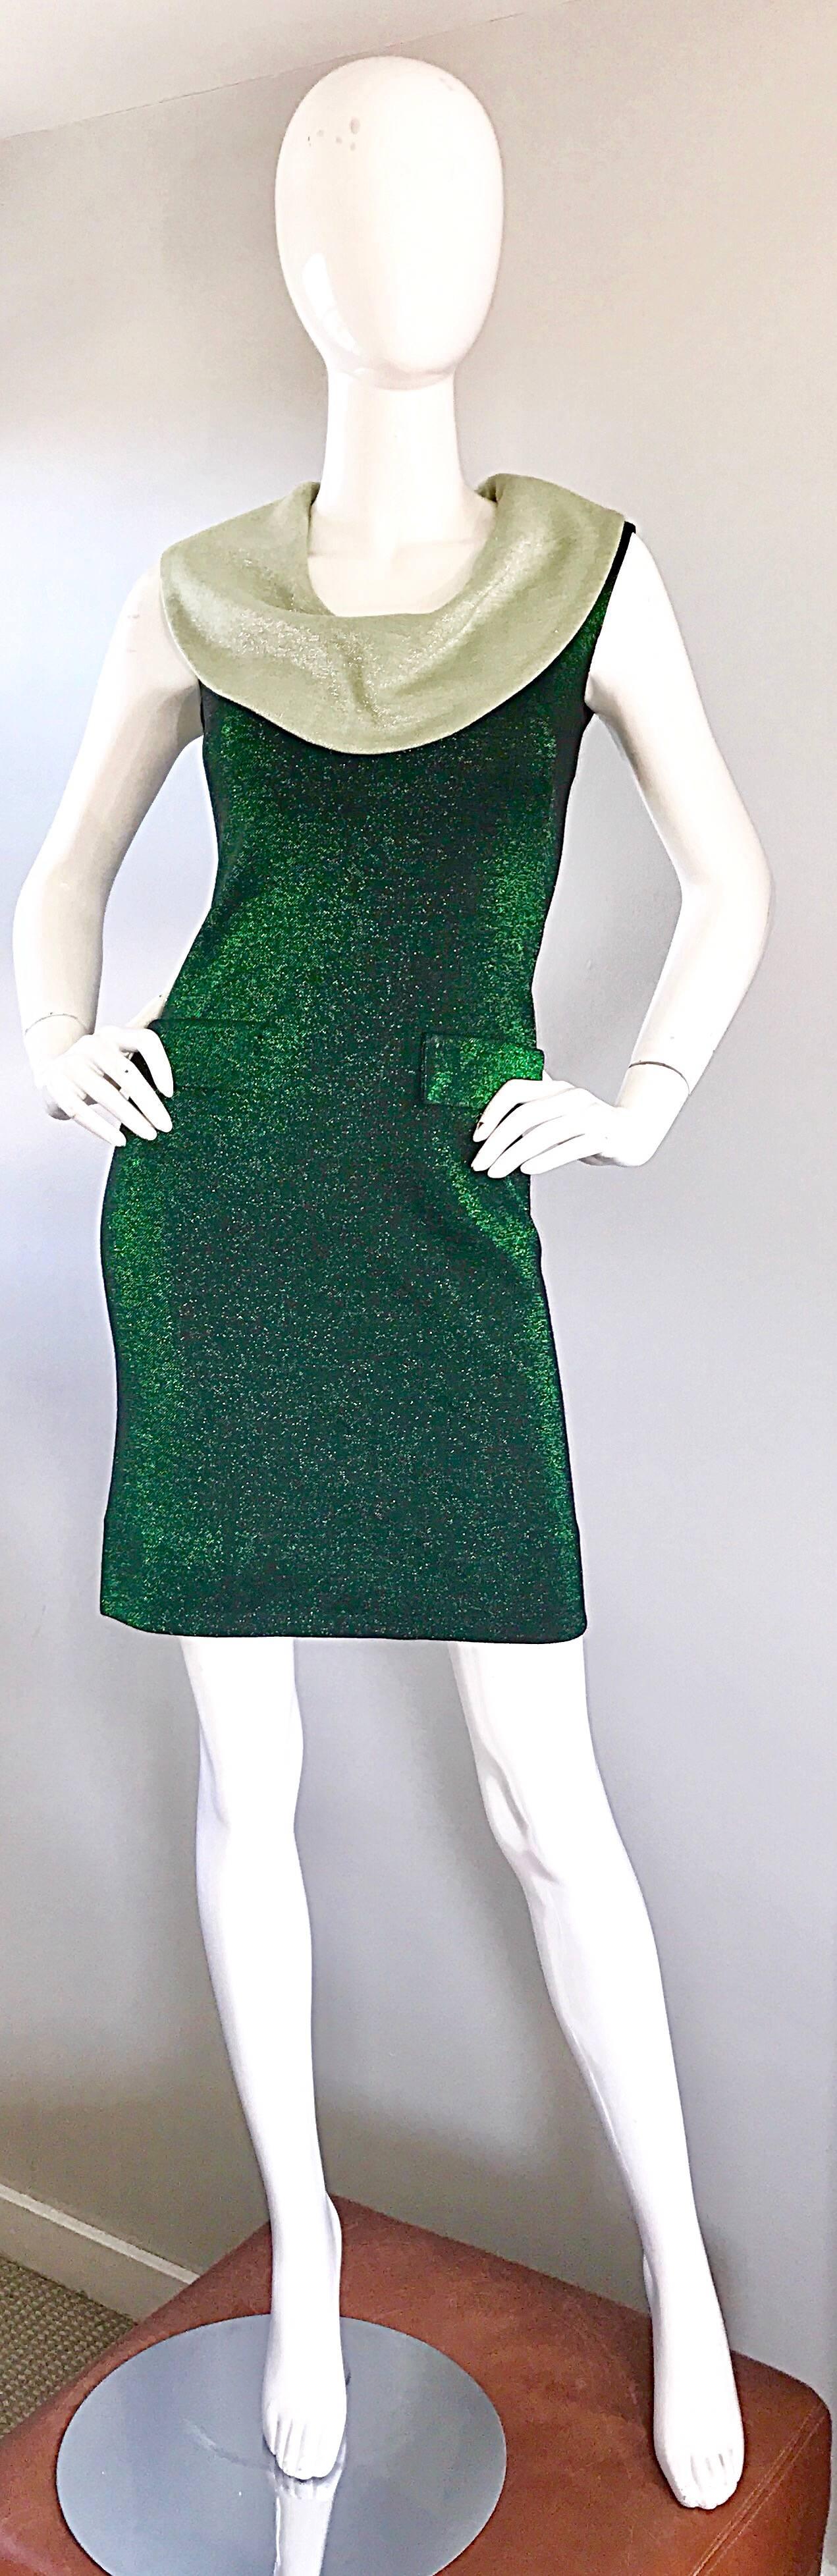 Chic 1960s Metallic Hunter Green + Mint Cowl Neck Vintage 60s Mod Shift Dress For Sale 1